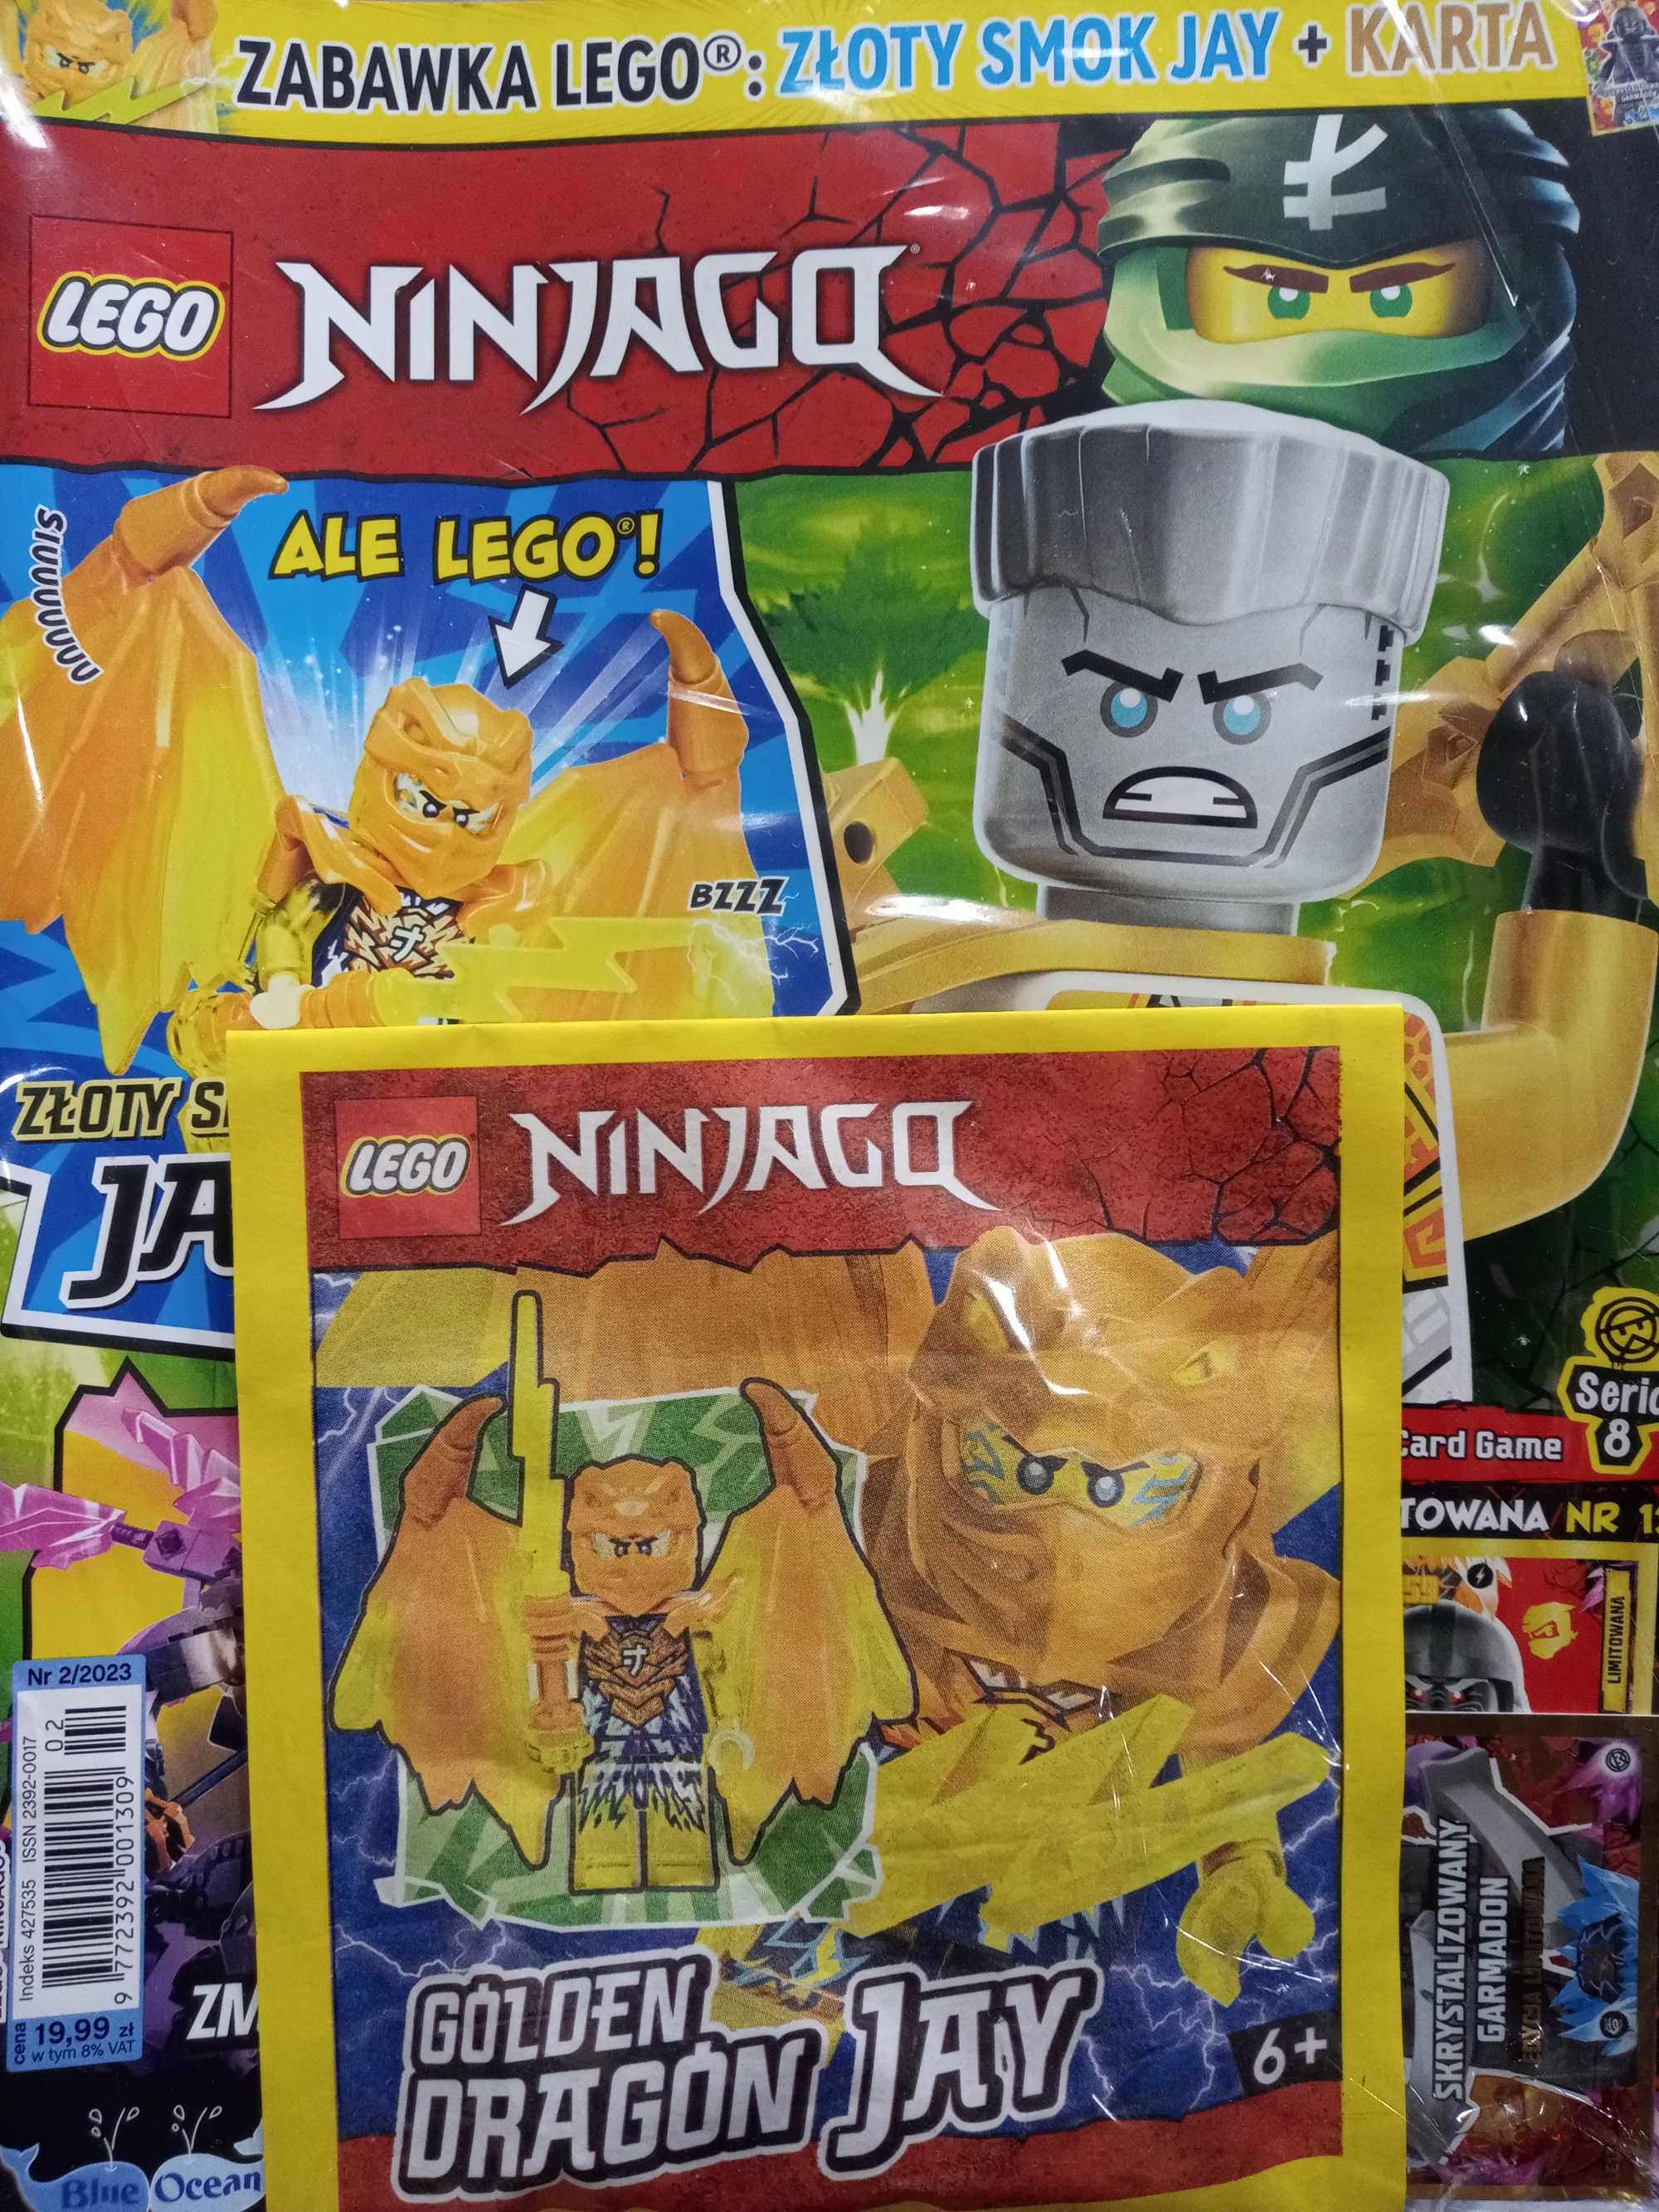 Golden Dragon Jay - Lego Ninjago